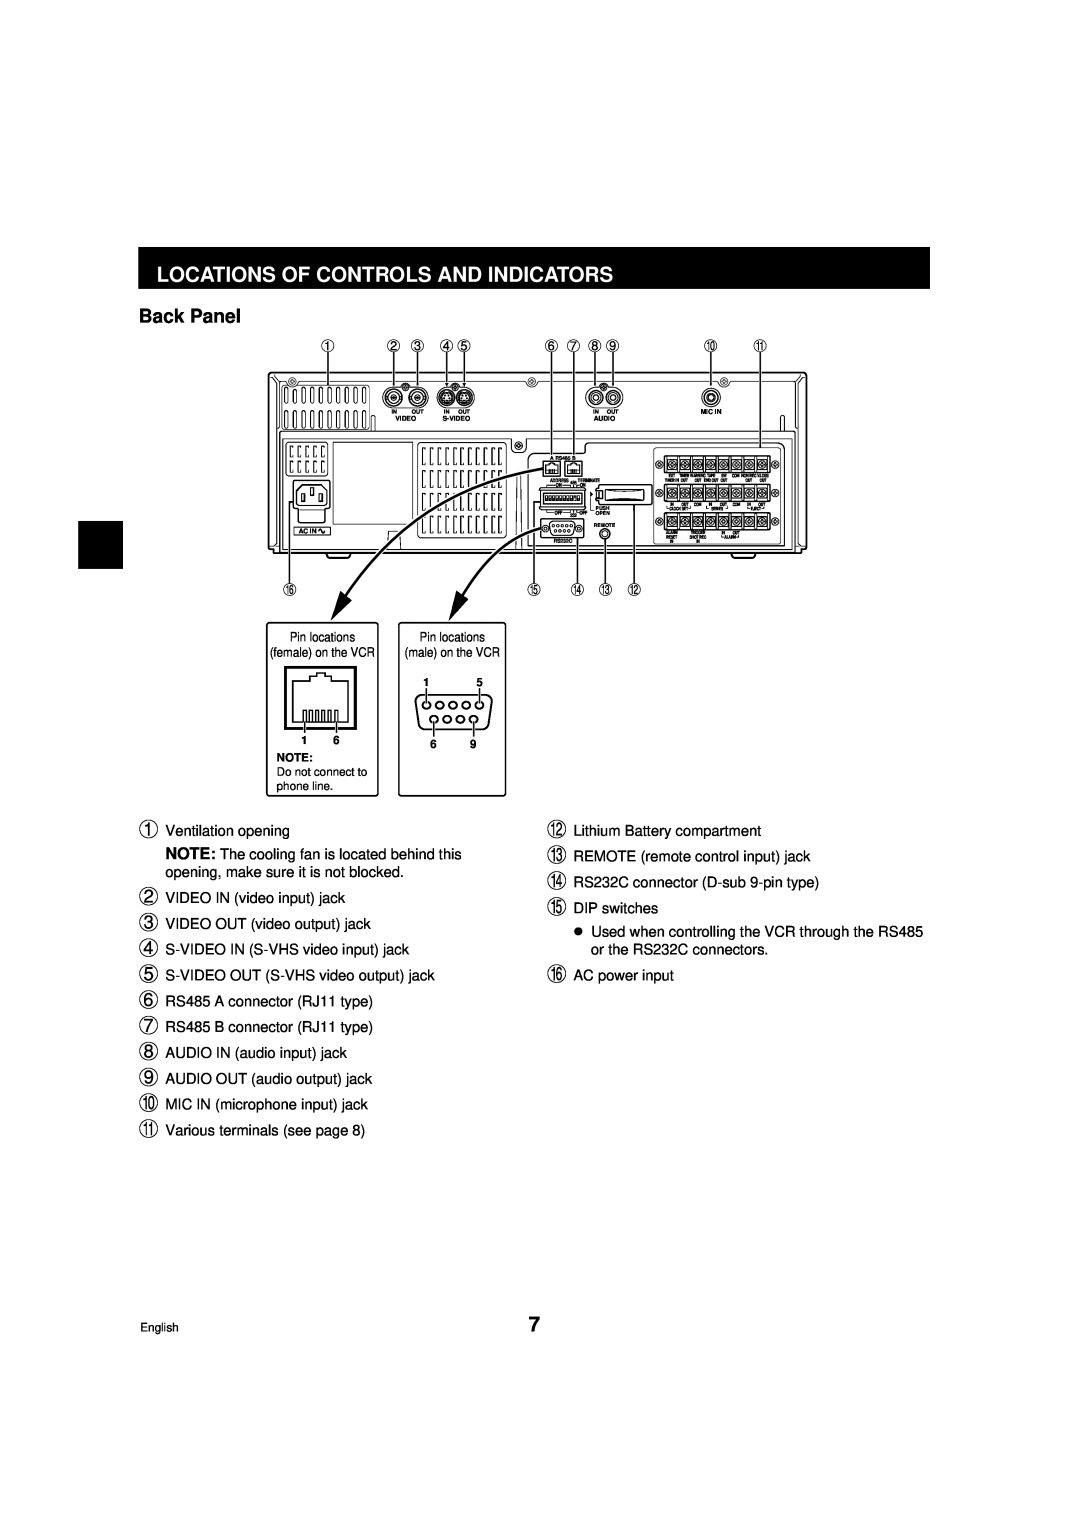 Sanyo DTL-4800, RD2QD/NA instruction manual Back Panel, Locations Of Controls And Indicators, H I J K L 